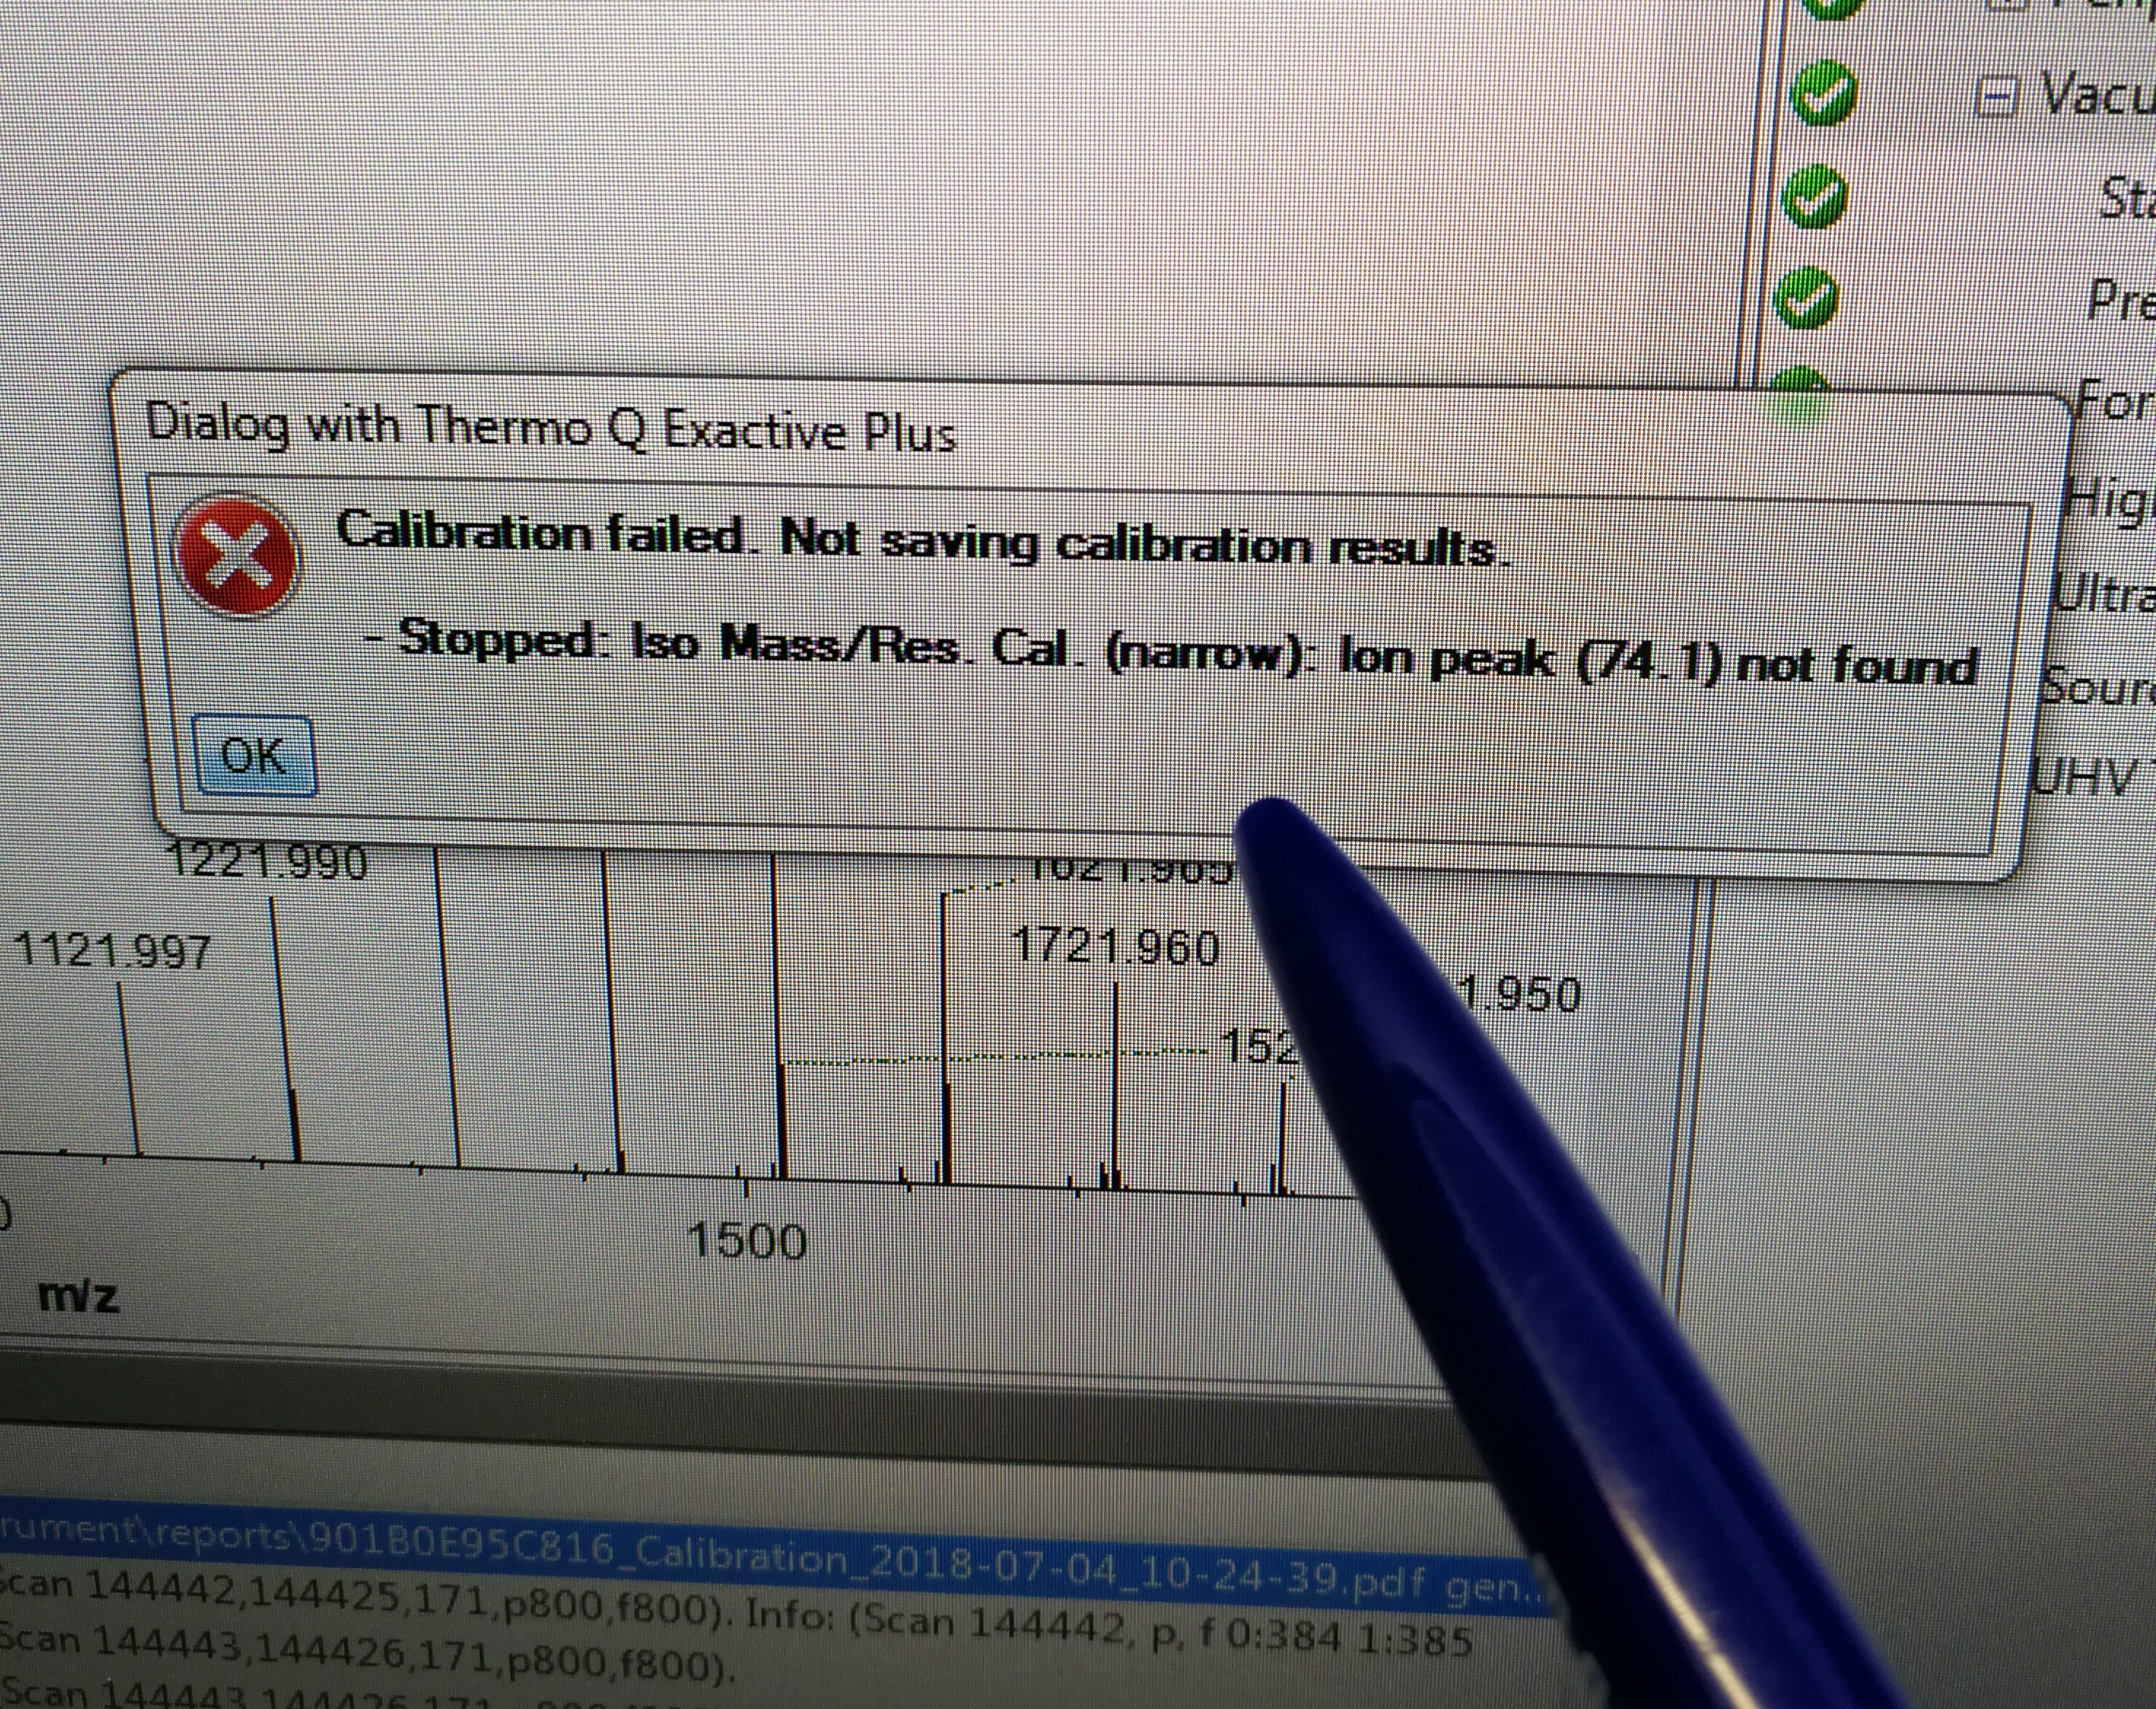 calibration error for Iso Mass/Res. Cal.(narrow)